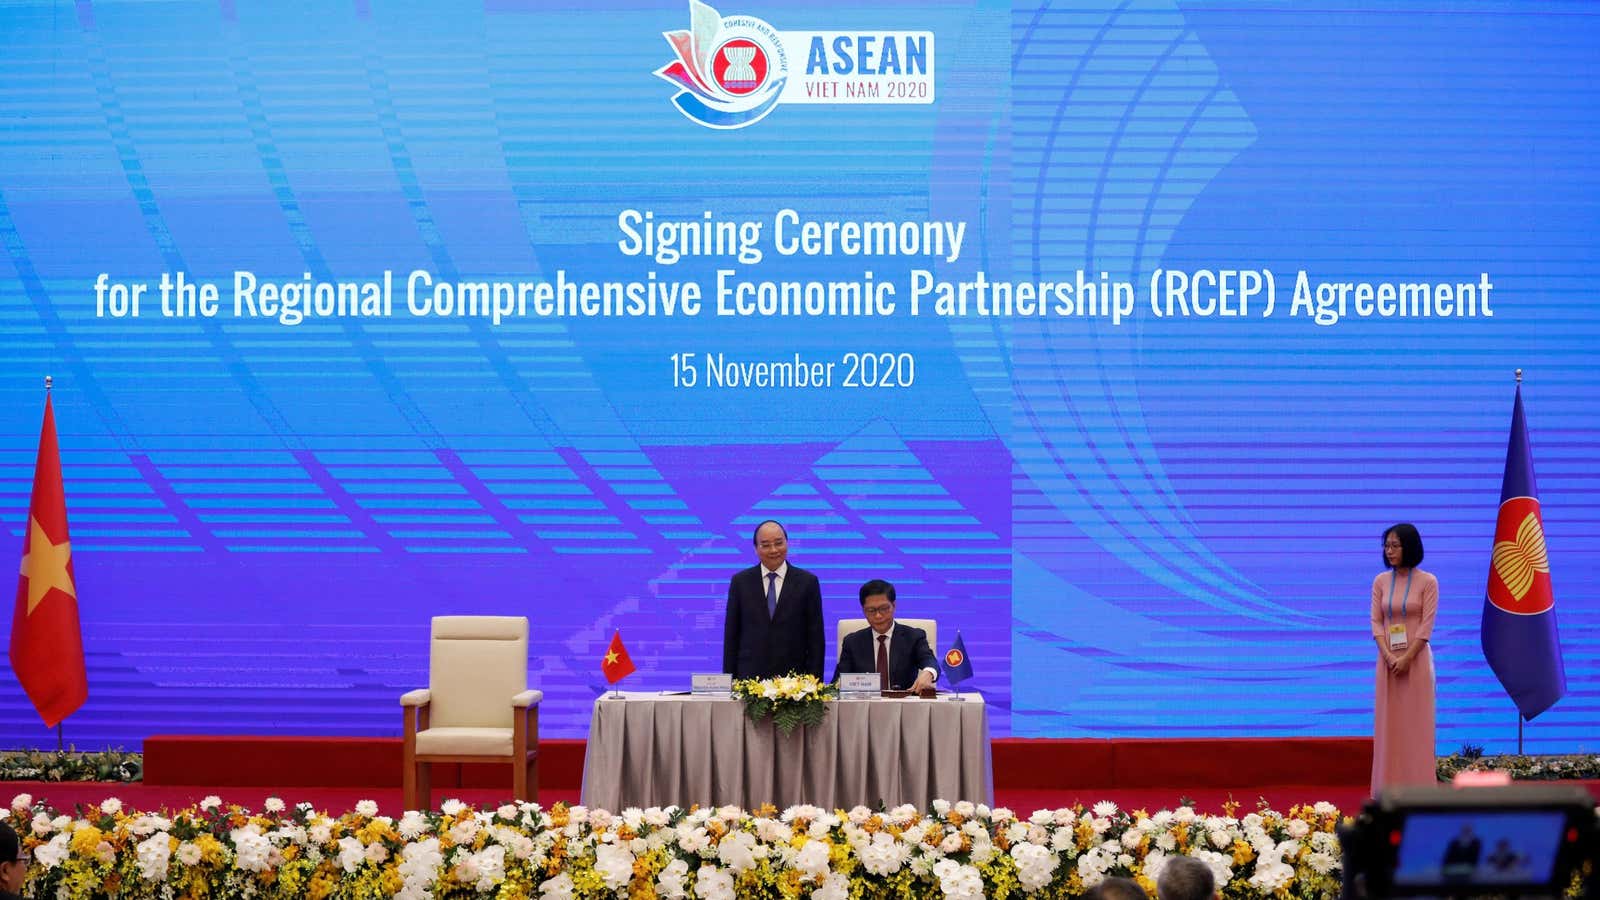 The signing ceremony of the Regional Comprehensive Economic Partnership (RCEP) Agreement in Hanoi, Vietnam on Nov. 15, 2020.